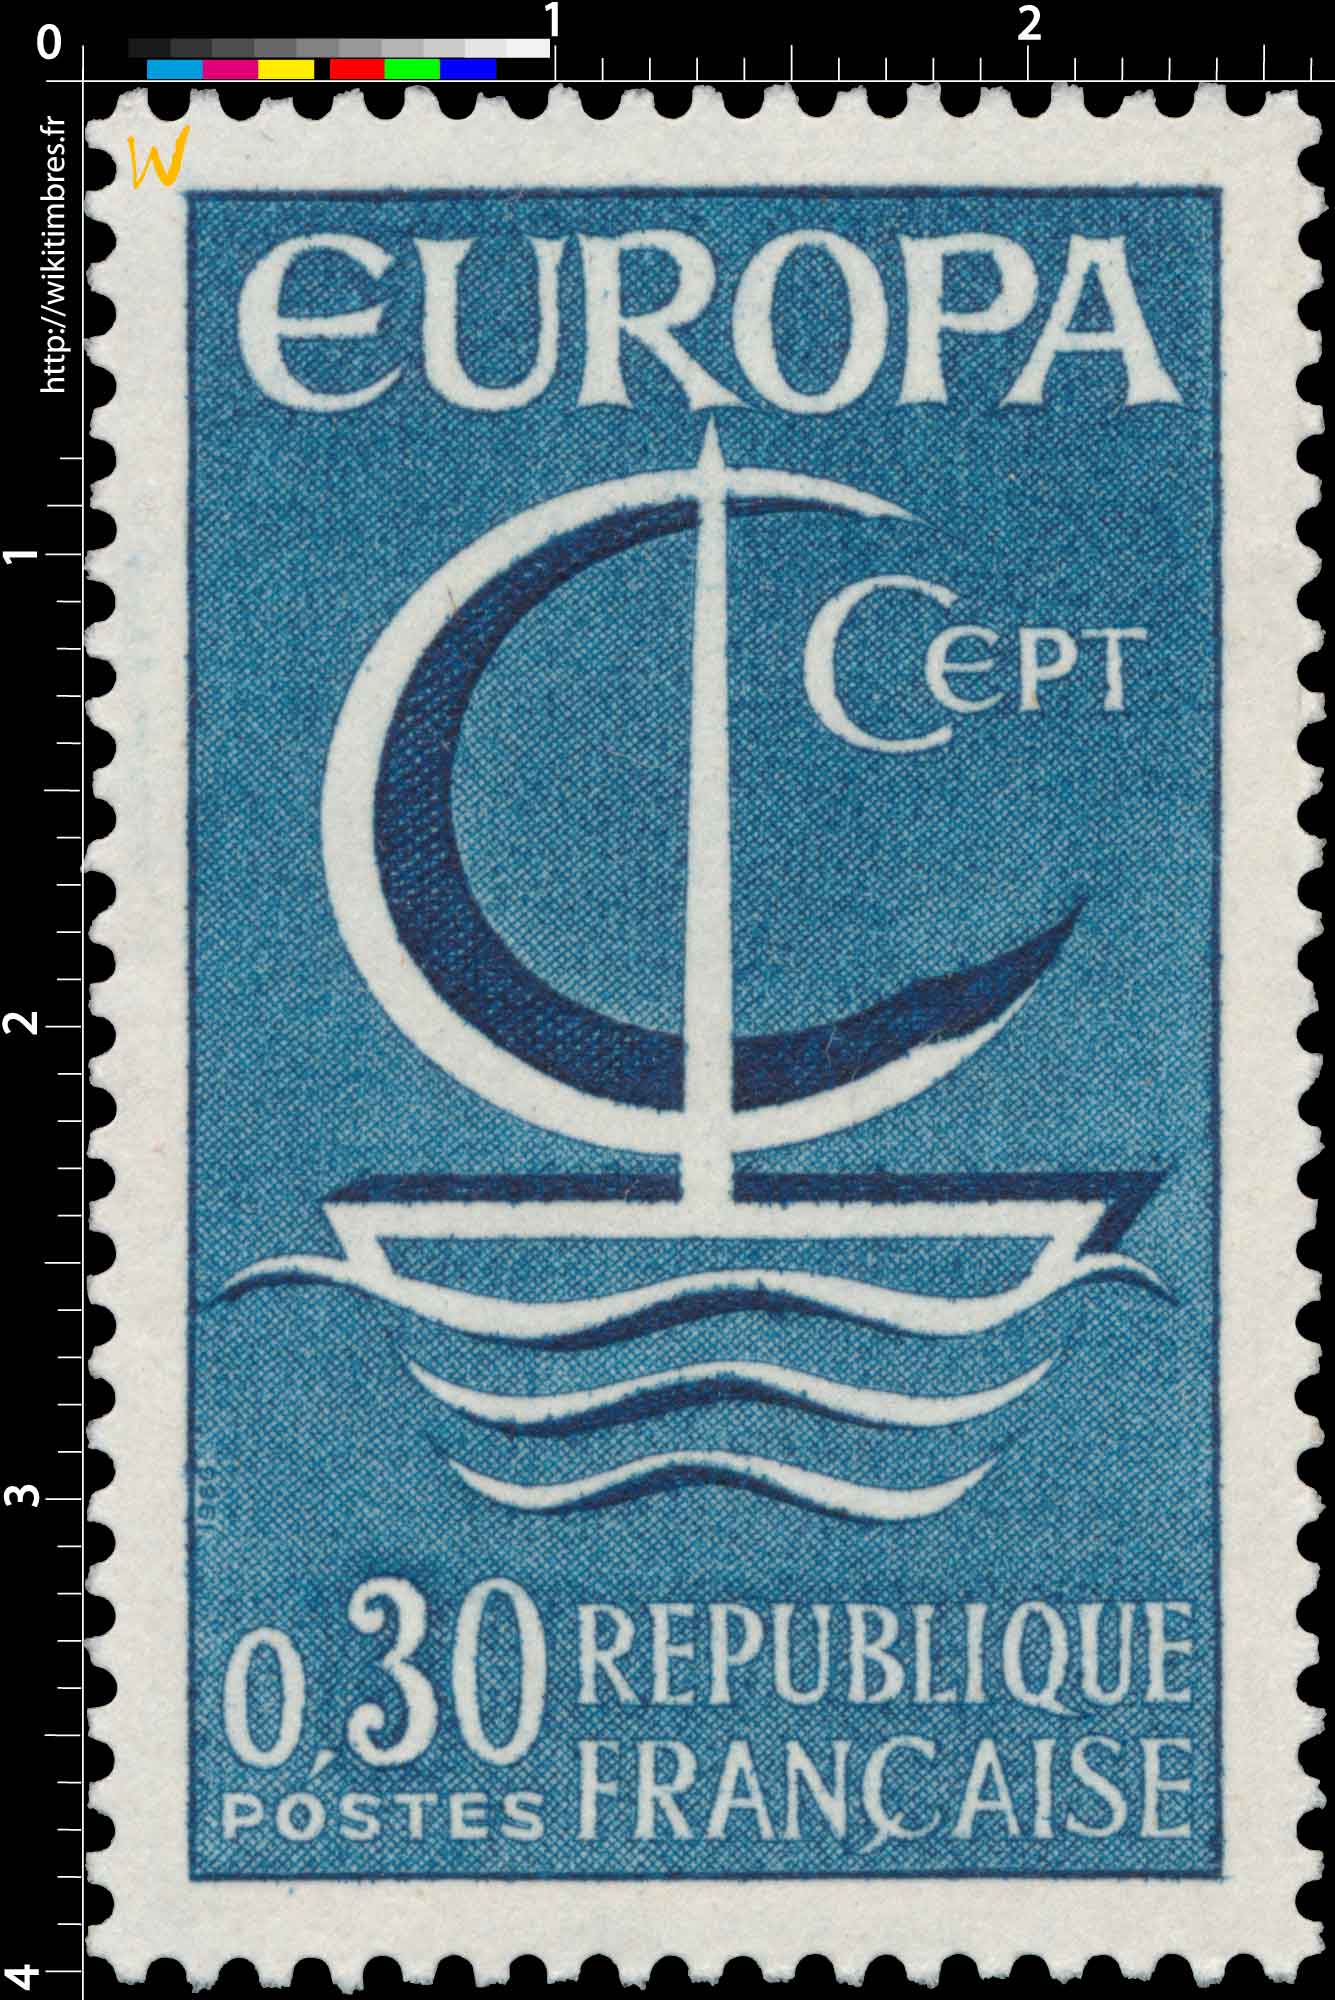 1966 EUROPA CEPT